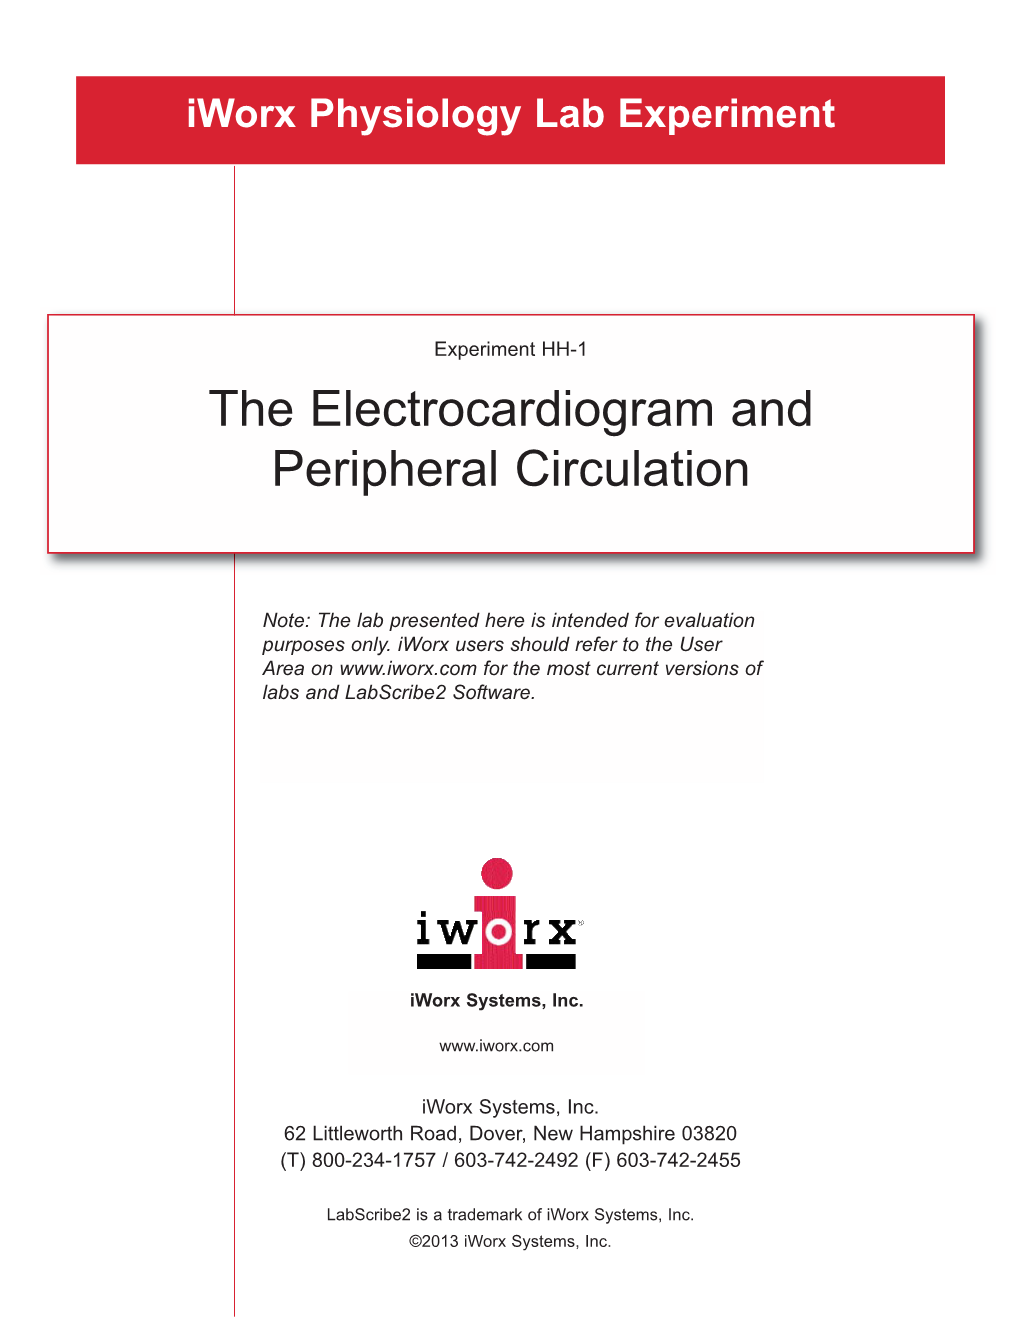 (ECG) and Peripheral Circulation